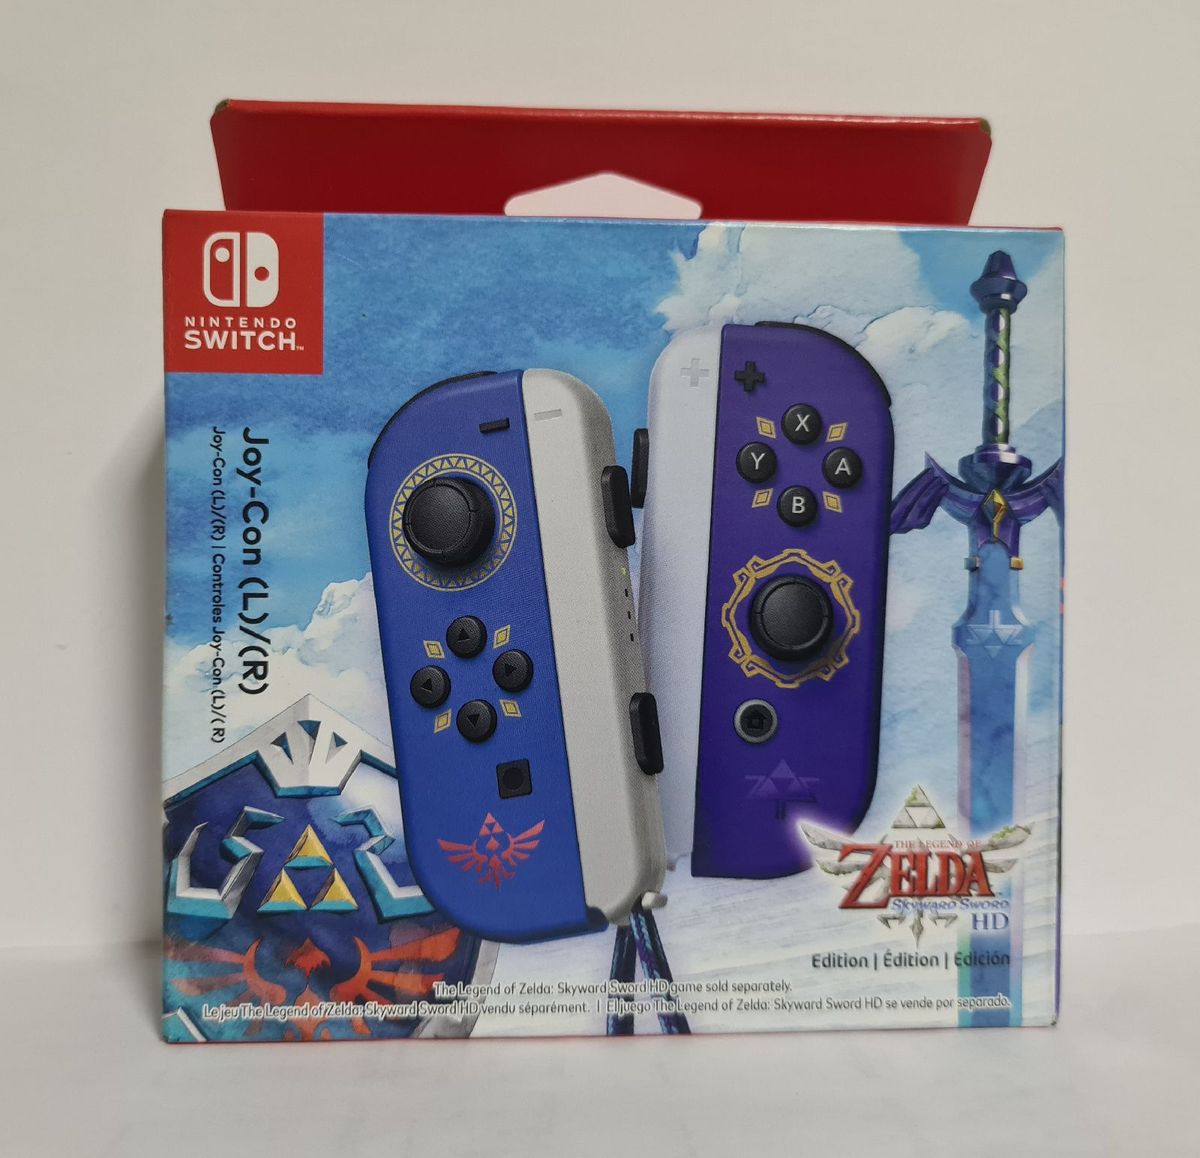 Nintendo Switch Joy Con The Legend Of Zelda Skyward Sword Edition Cheap Online Save 64 Customervoiceexperience Com Br